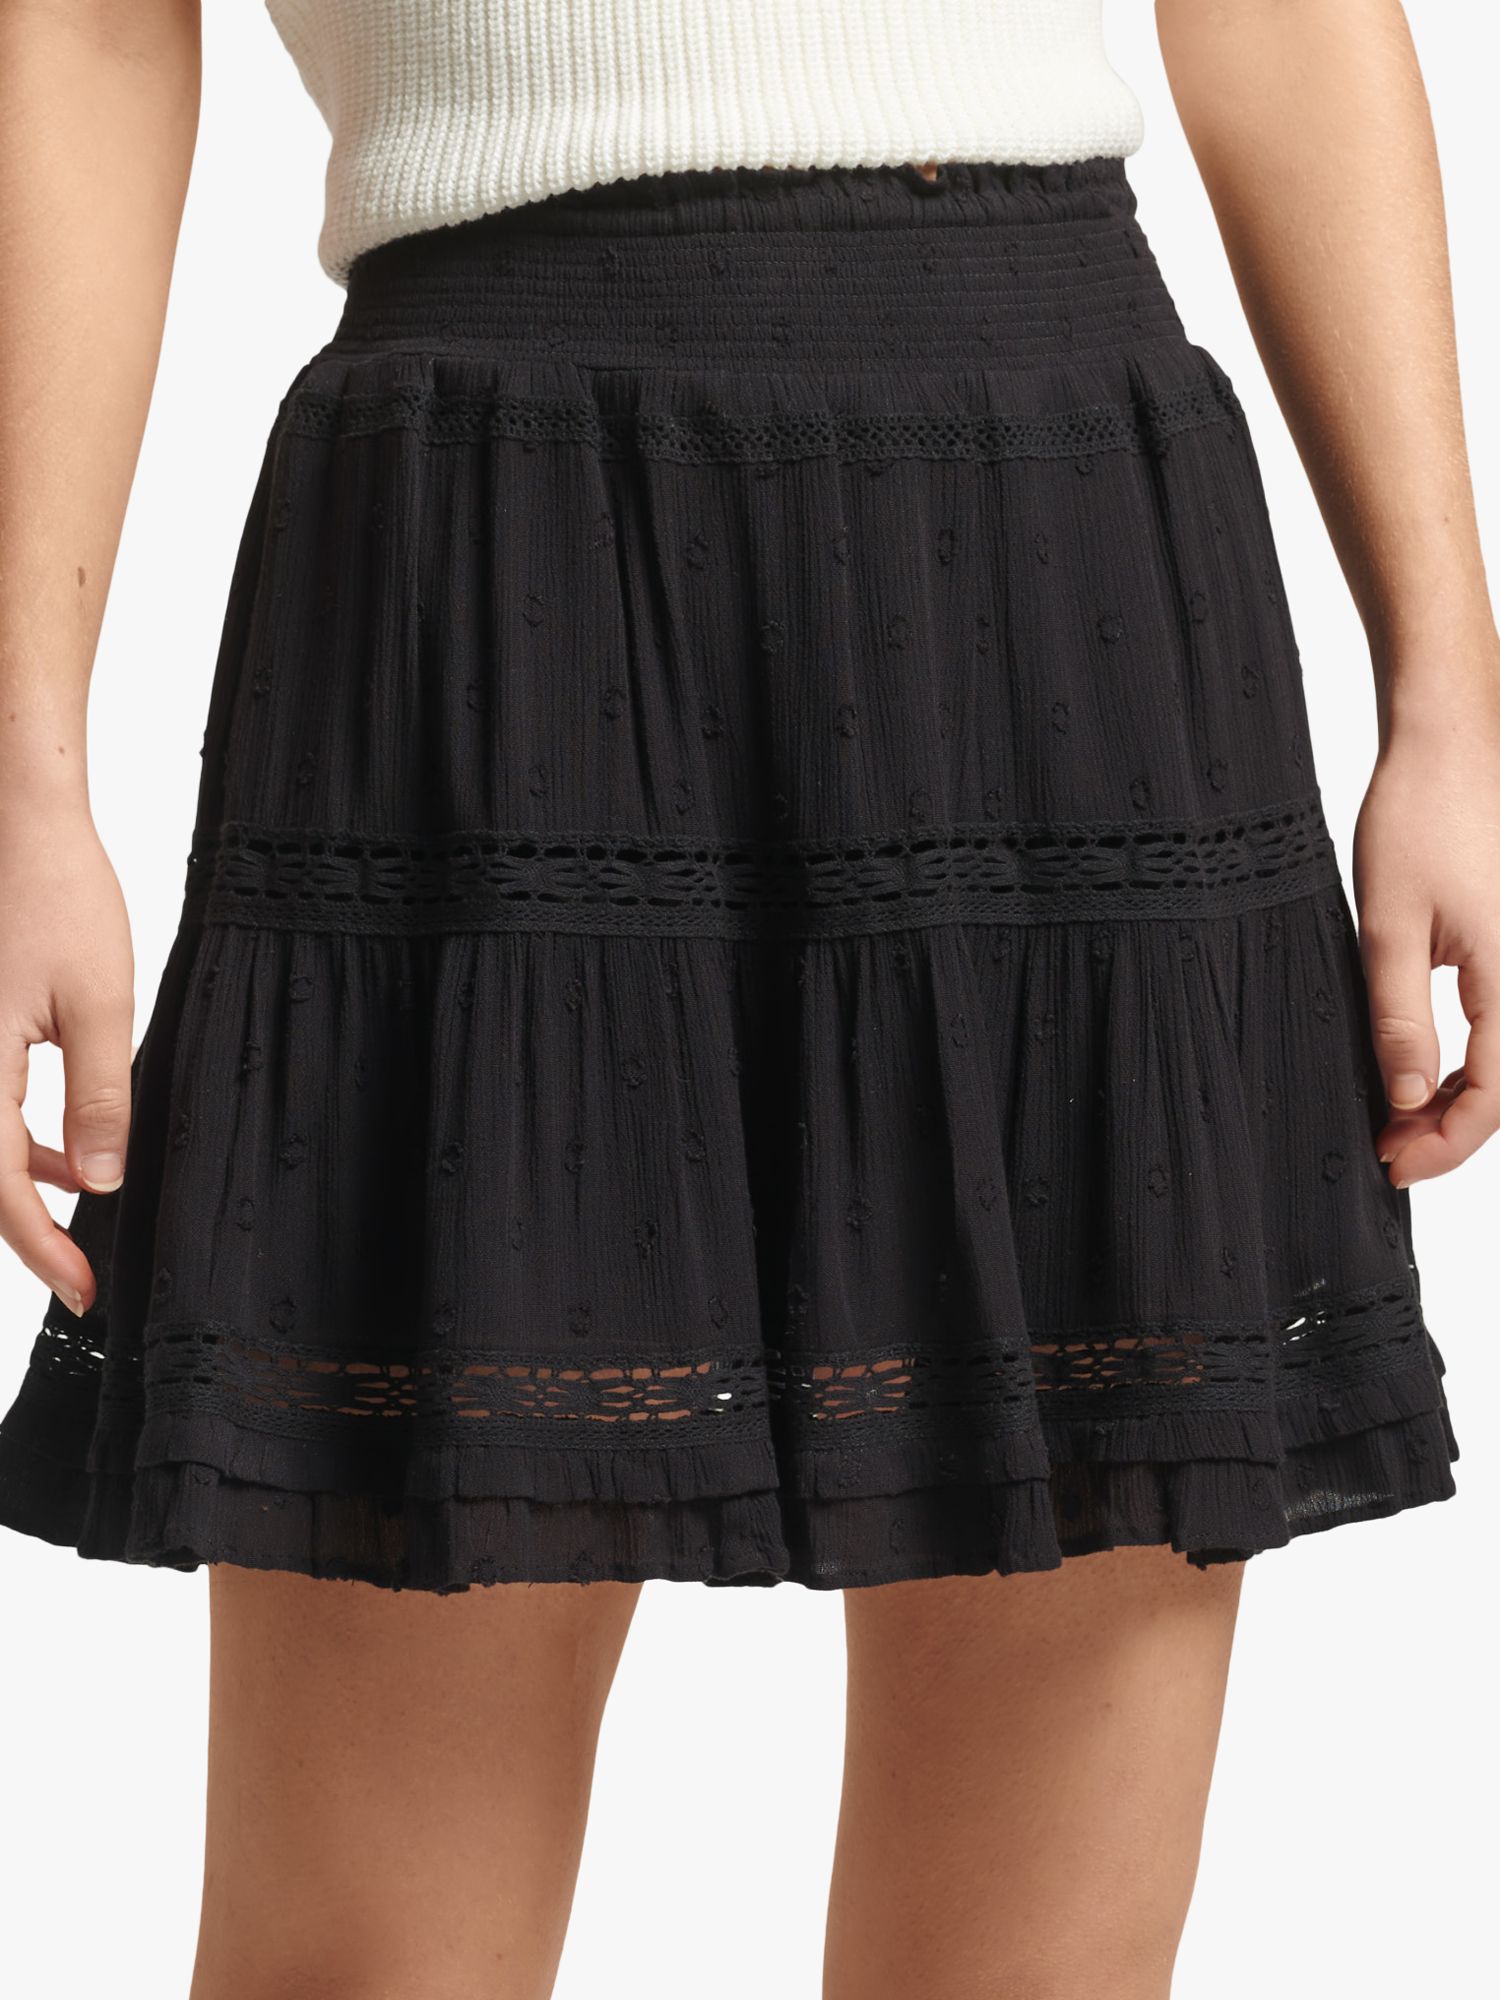 Superdry Vintage Lace Mini Skirt, Black at John Lewis & Partners